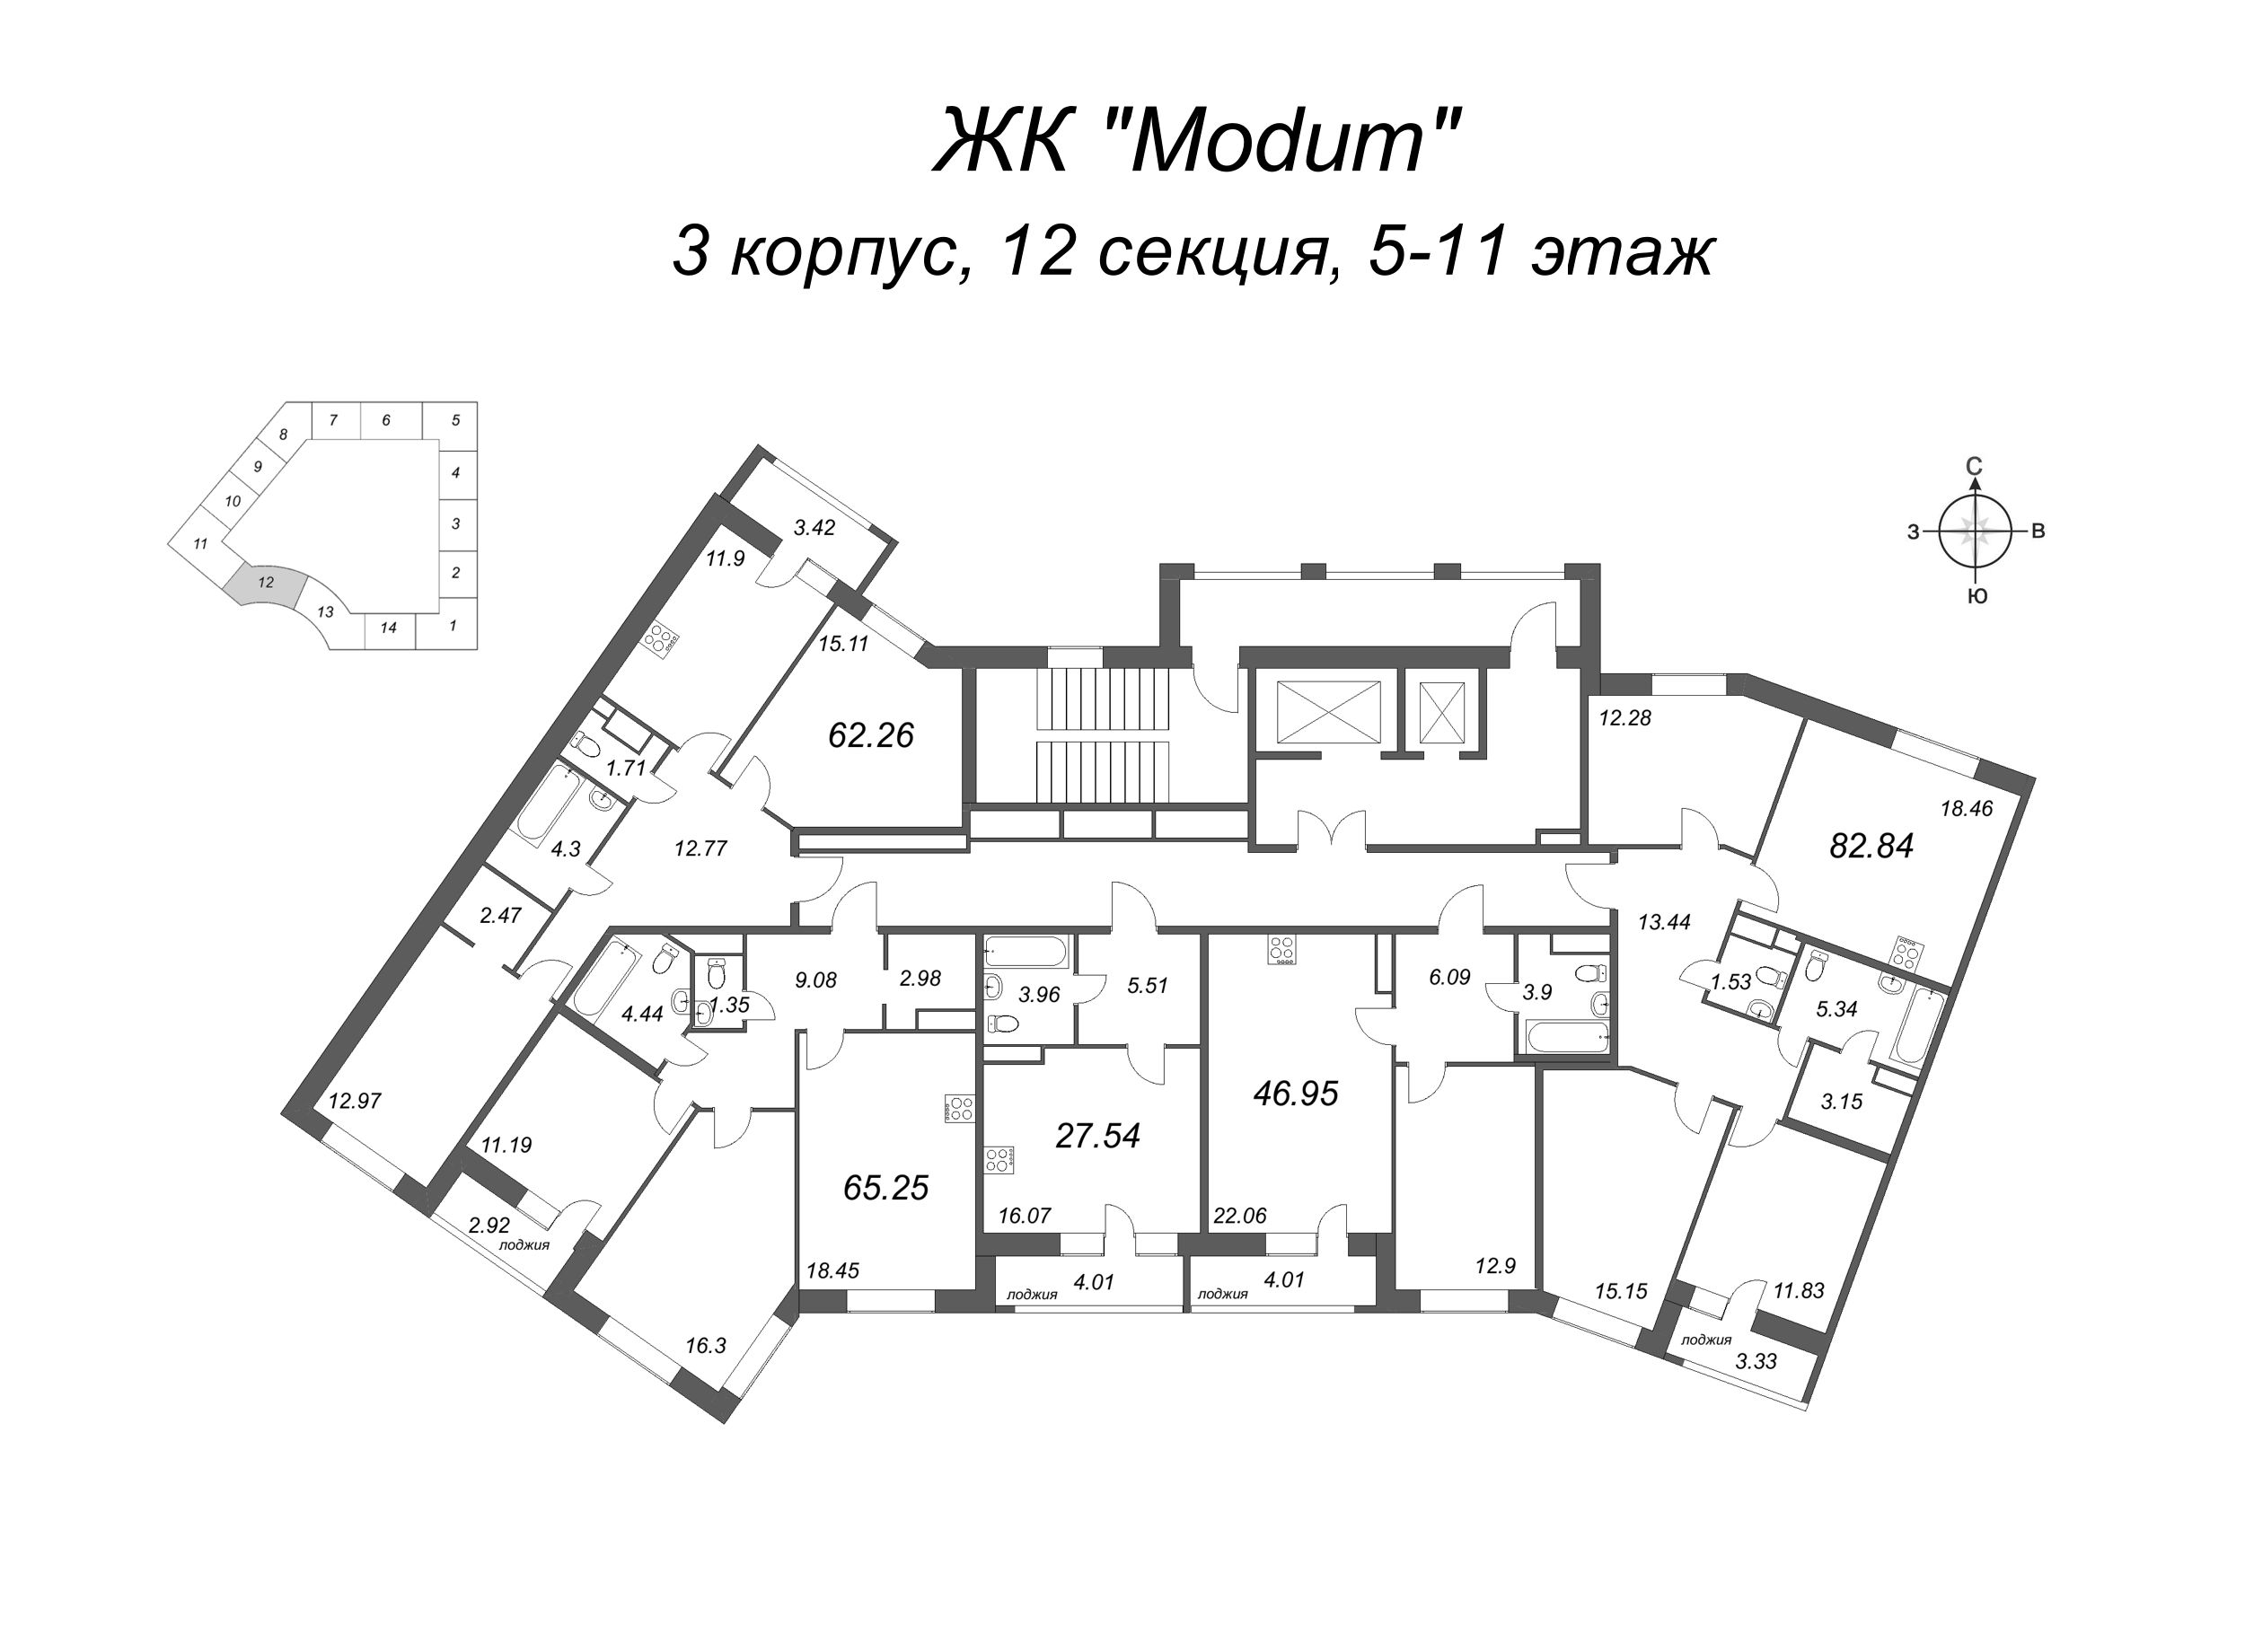 4-комнатная (Евро) квартира, 82.84 м² - планировка этажа